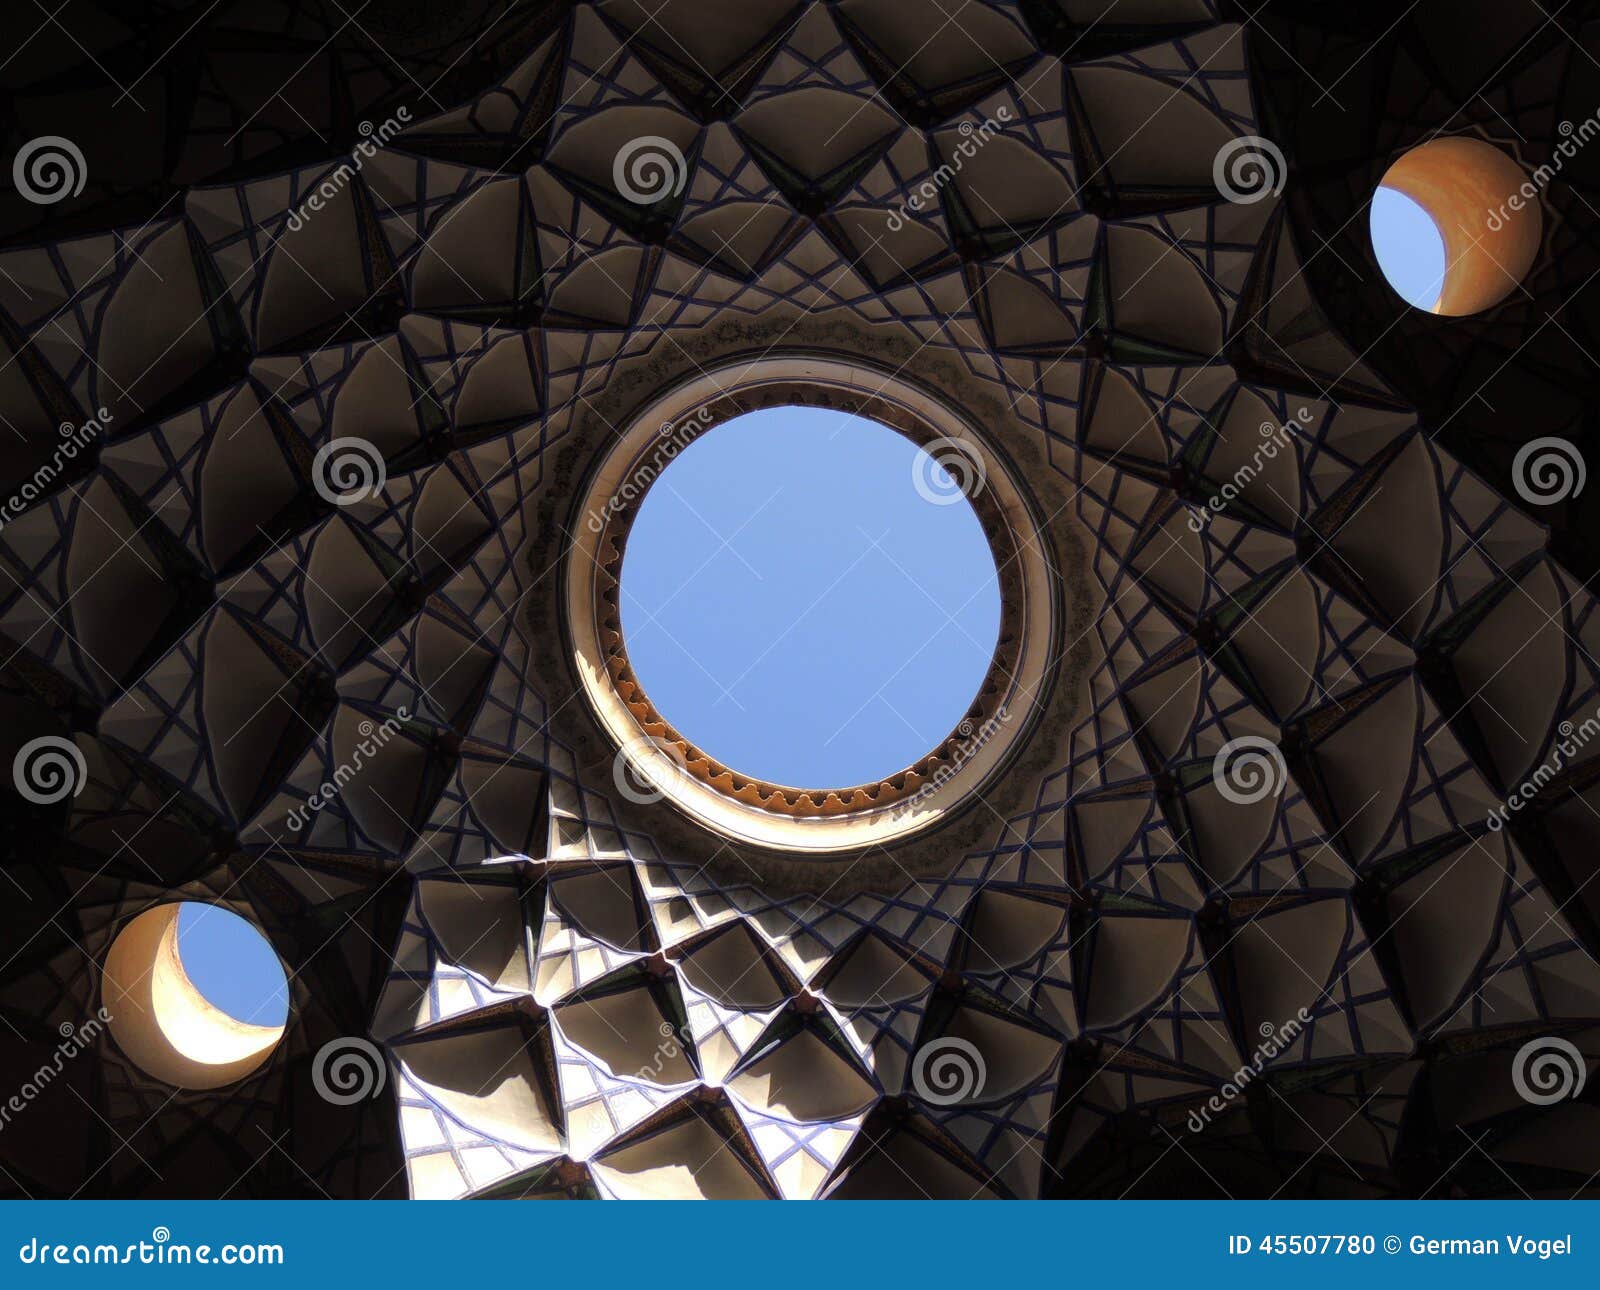 creative architecture ceiling mosaic  in kashan, iran